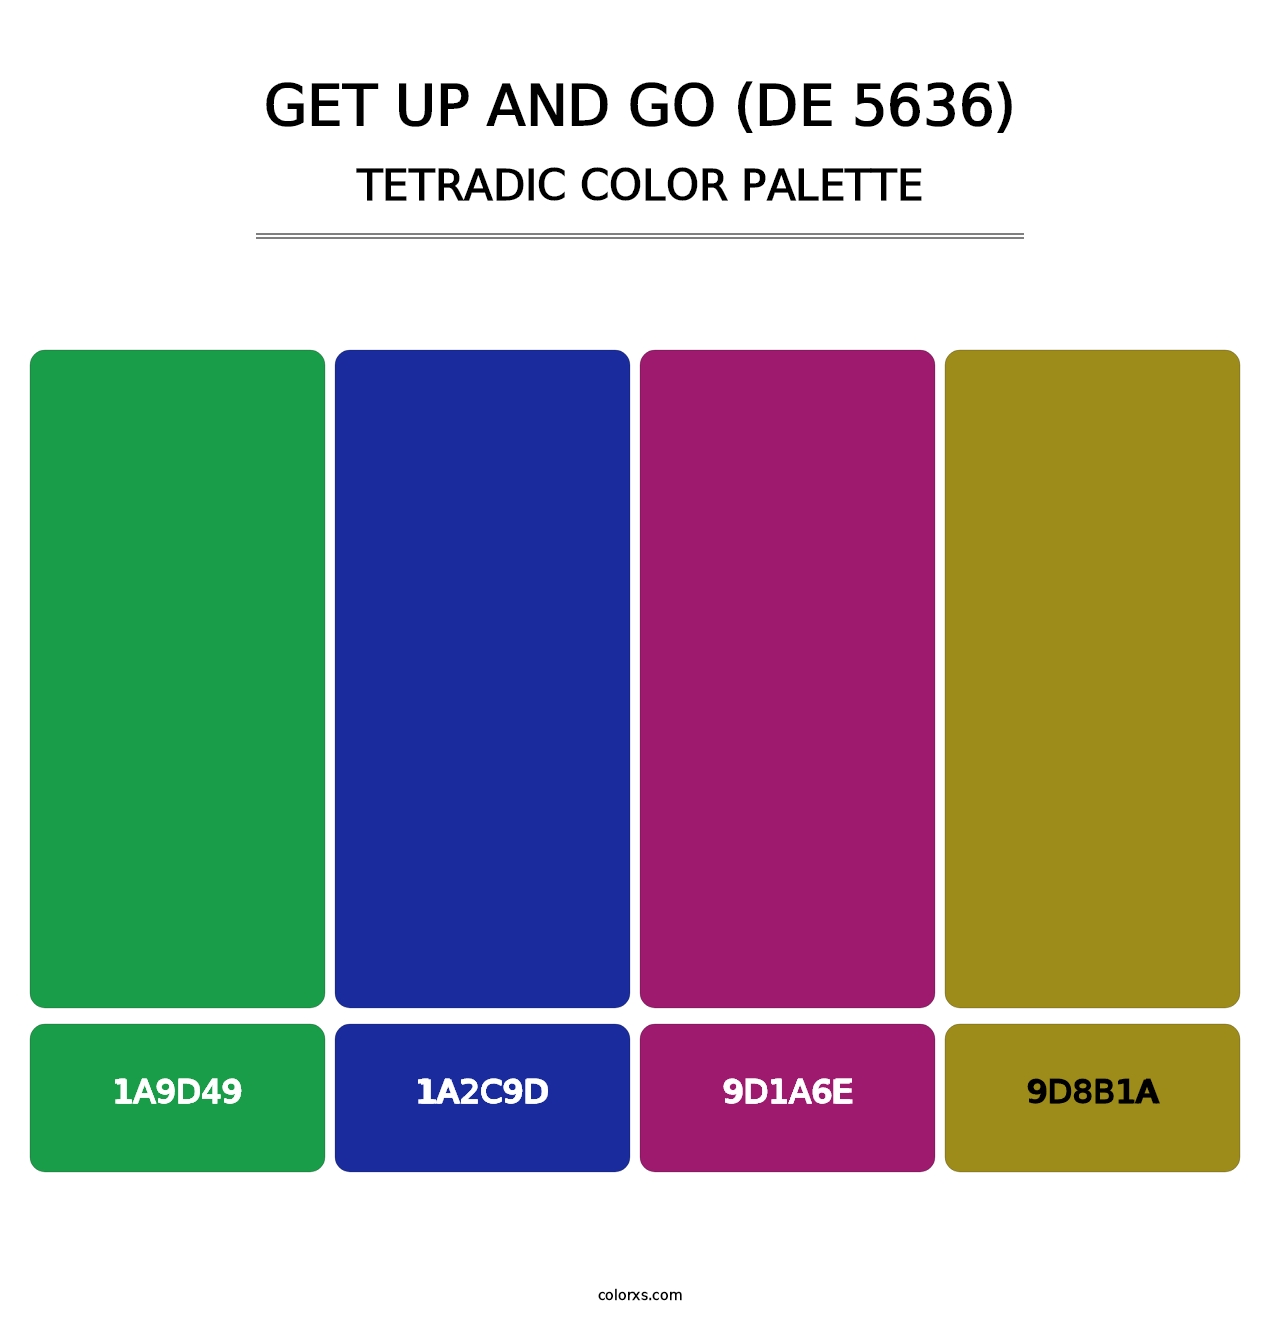 Get Up and Go (DE 5636) - Tetradic Color Palette